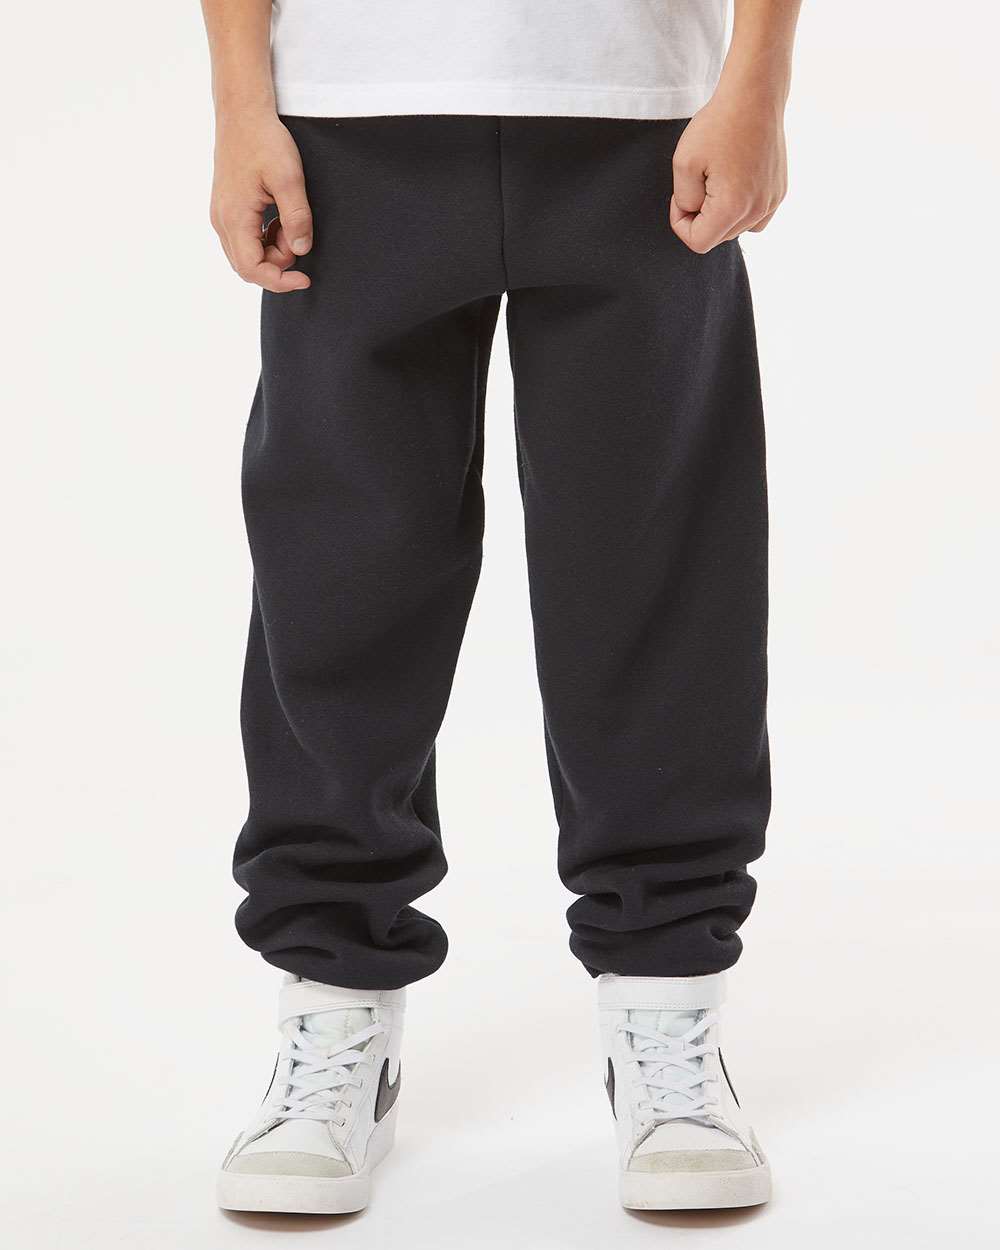 Custom Russell Athletic Sweatpants